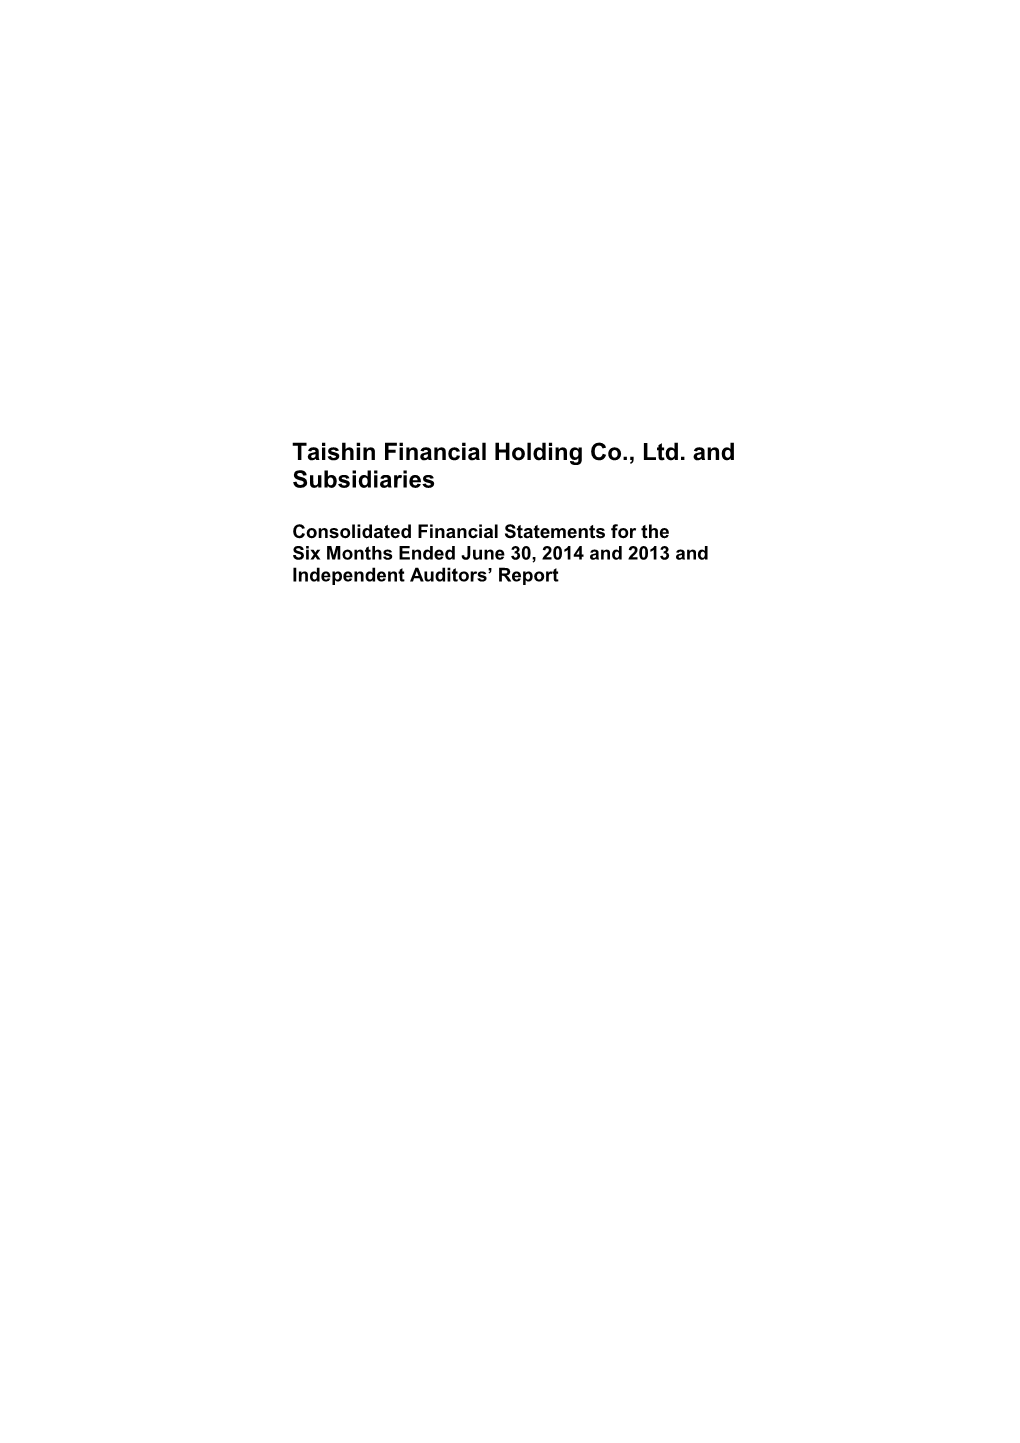 Taishin Financial Holding Co., Ltd. and Subsidiaries